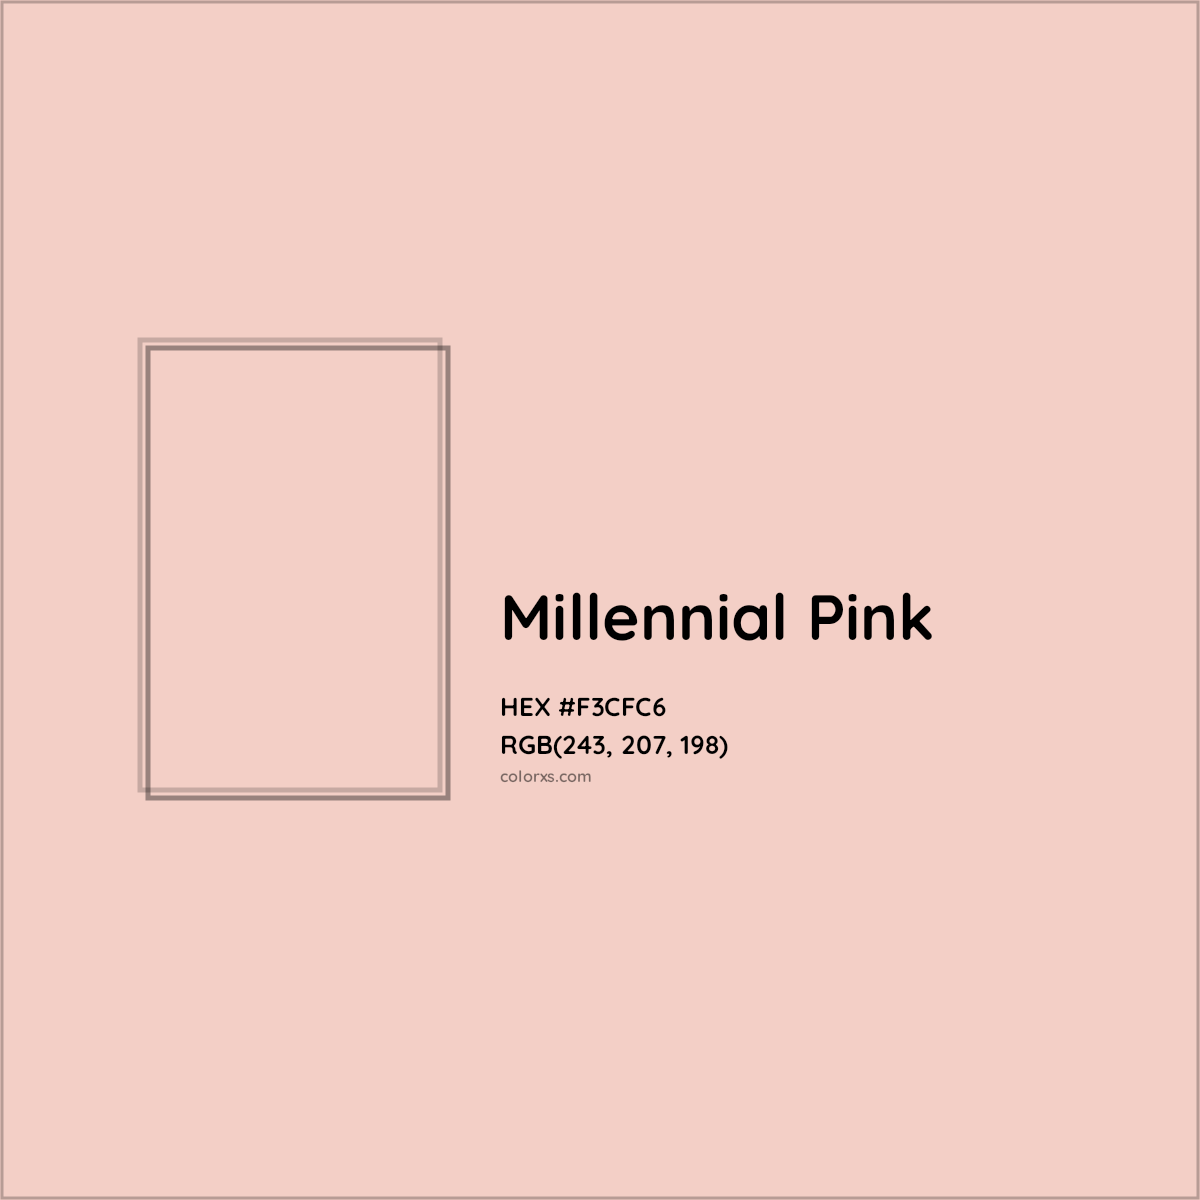 About Millennial Pink Color - Color codes, similar colors and paints 